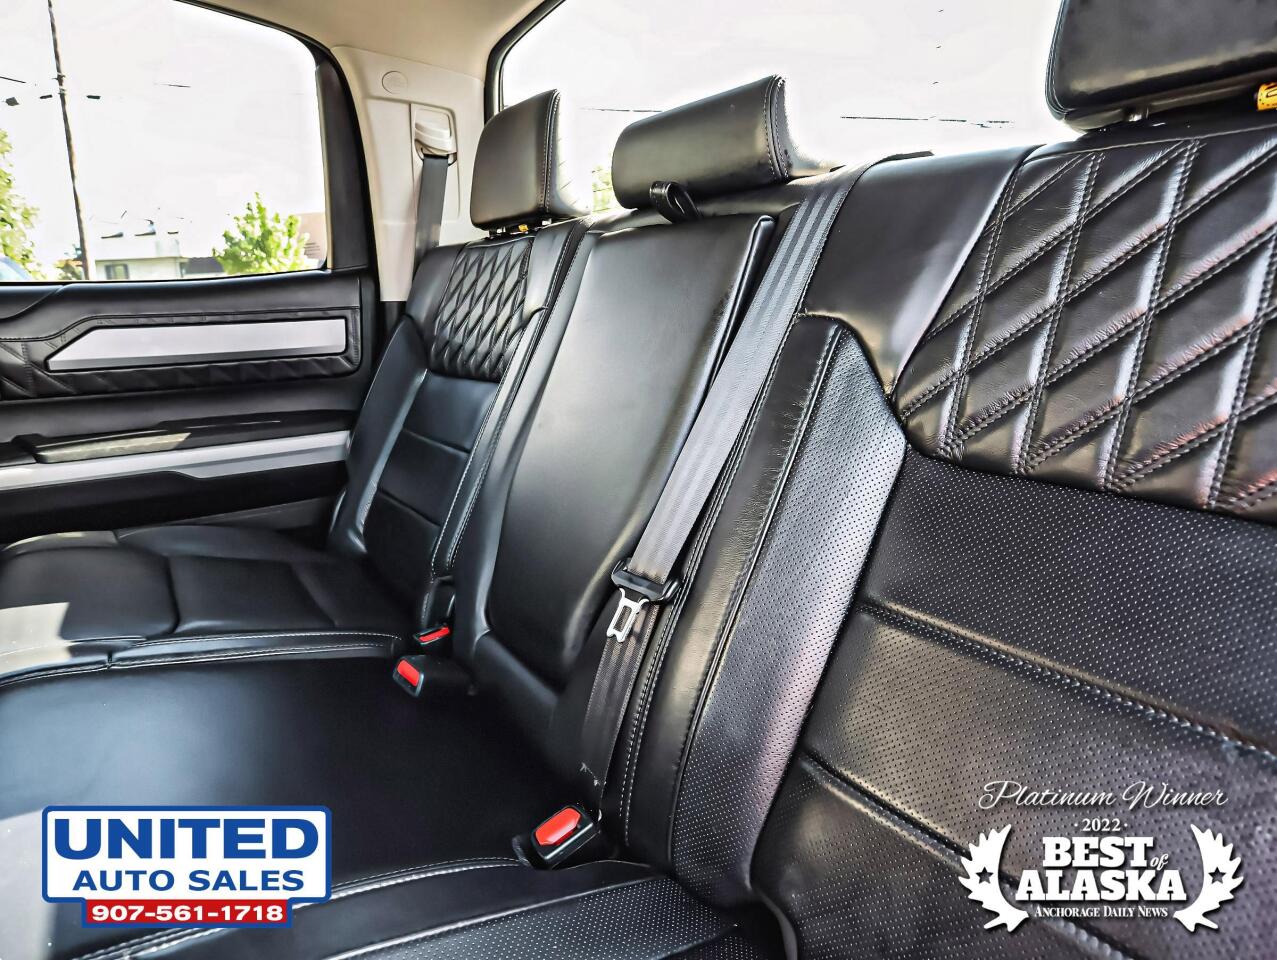 2019 Toyota Tundra Platinum 4x4 4dr CrewMax Cab Pickup SB (5.7L V8) 34